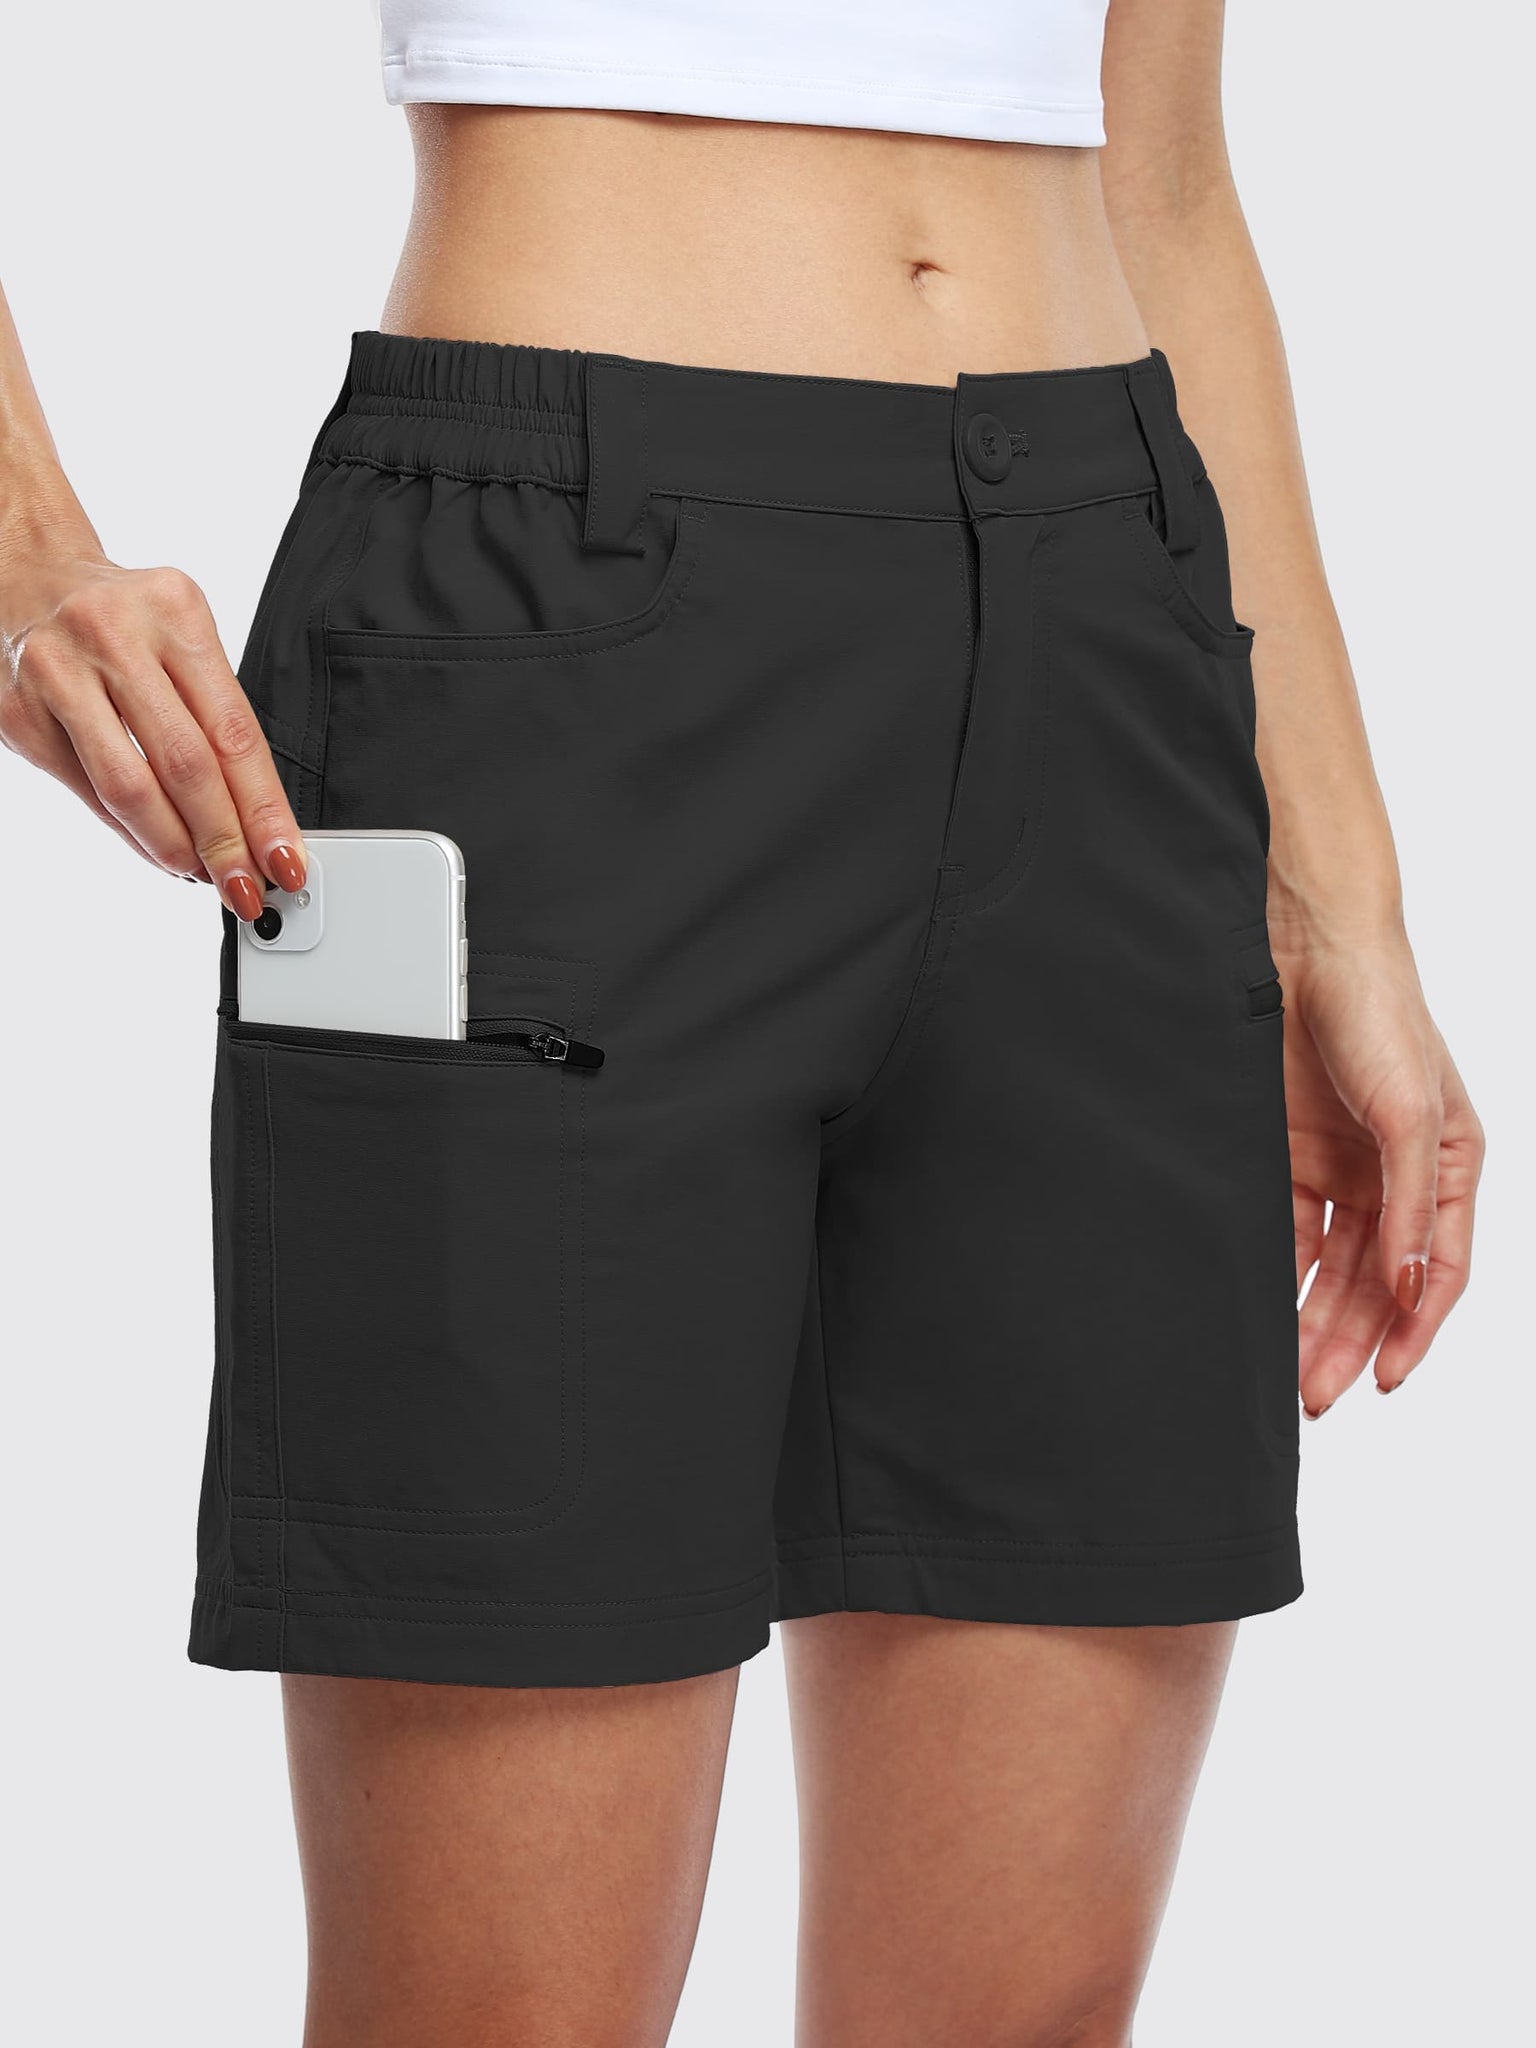 Willit Women's Outdoor Cargo Shorts 6 Inseam_Black_model4